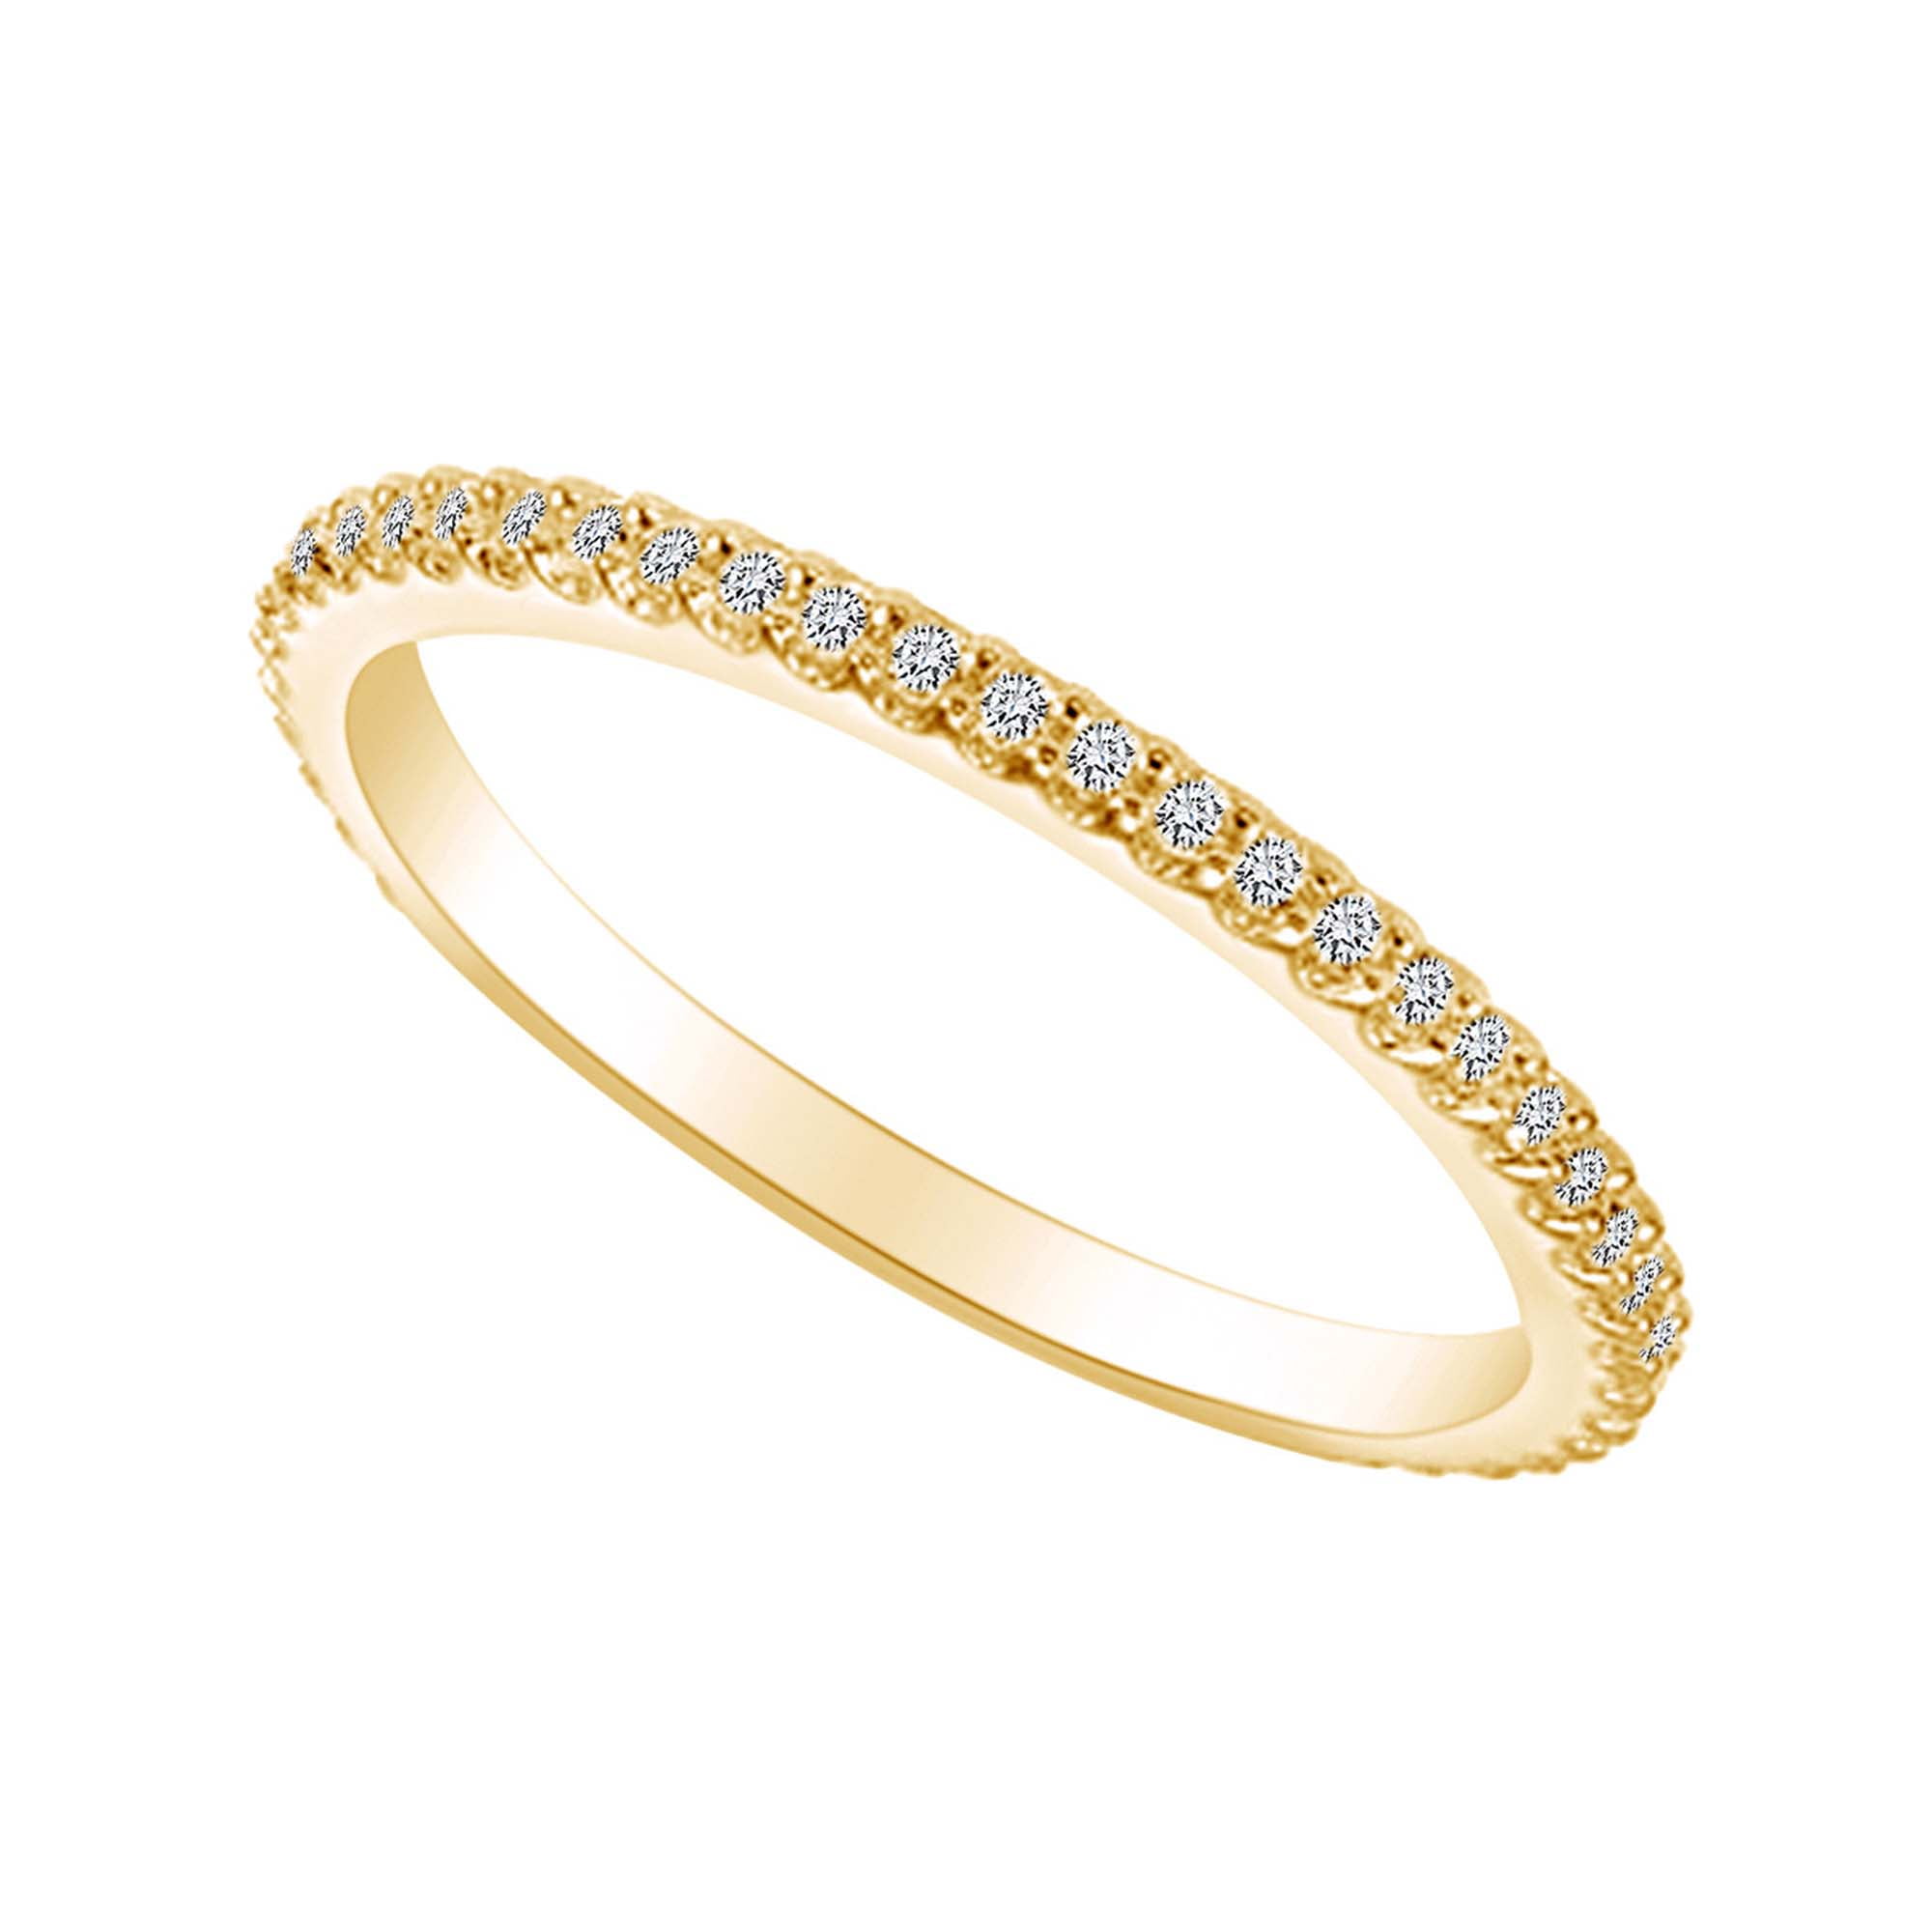 Hand made 20 carat of gold Ring make on order with Amethyst Stone  #handmadegoldrings #20caratgold #amethyst #amethystgoldring | Instagram